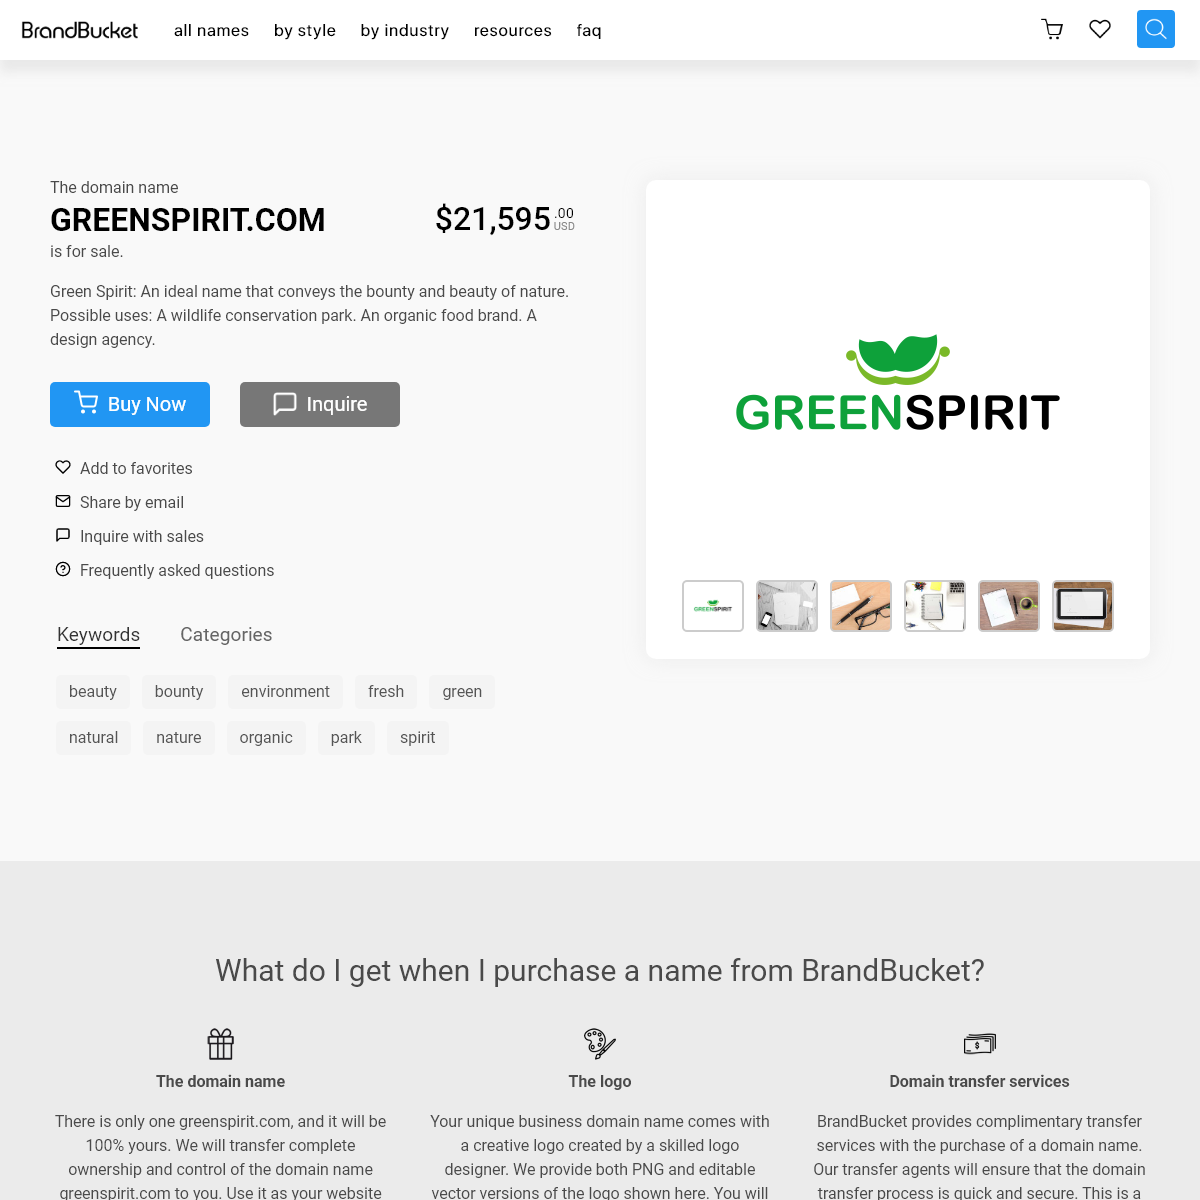 A complete backup of greenspirit.com